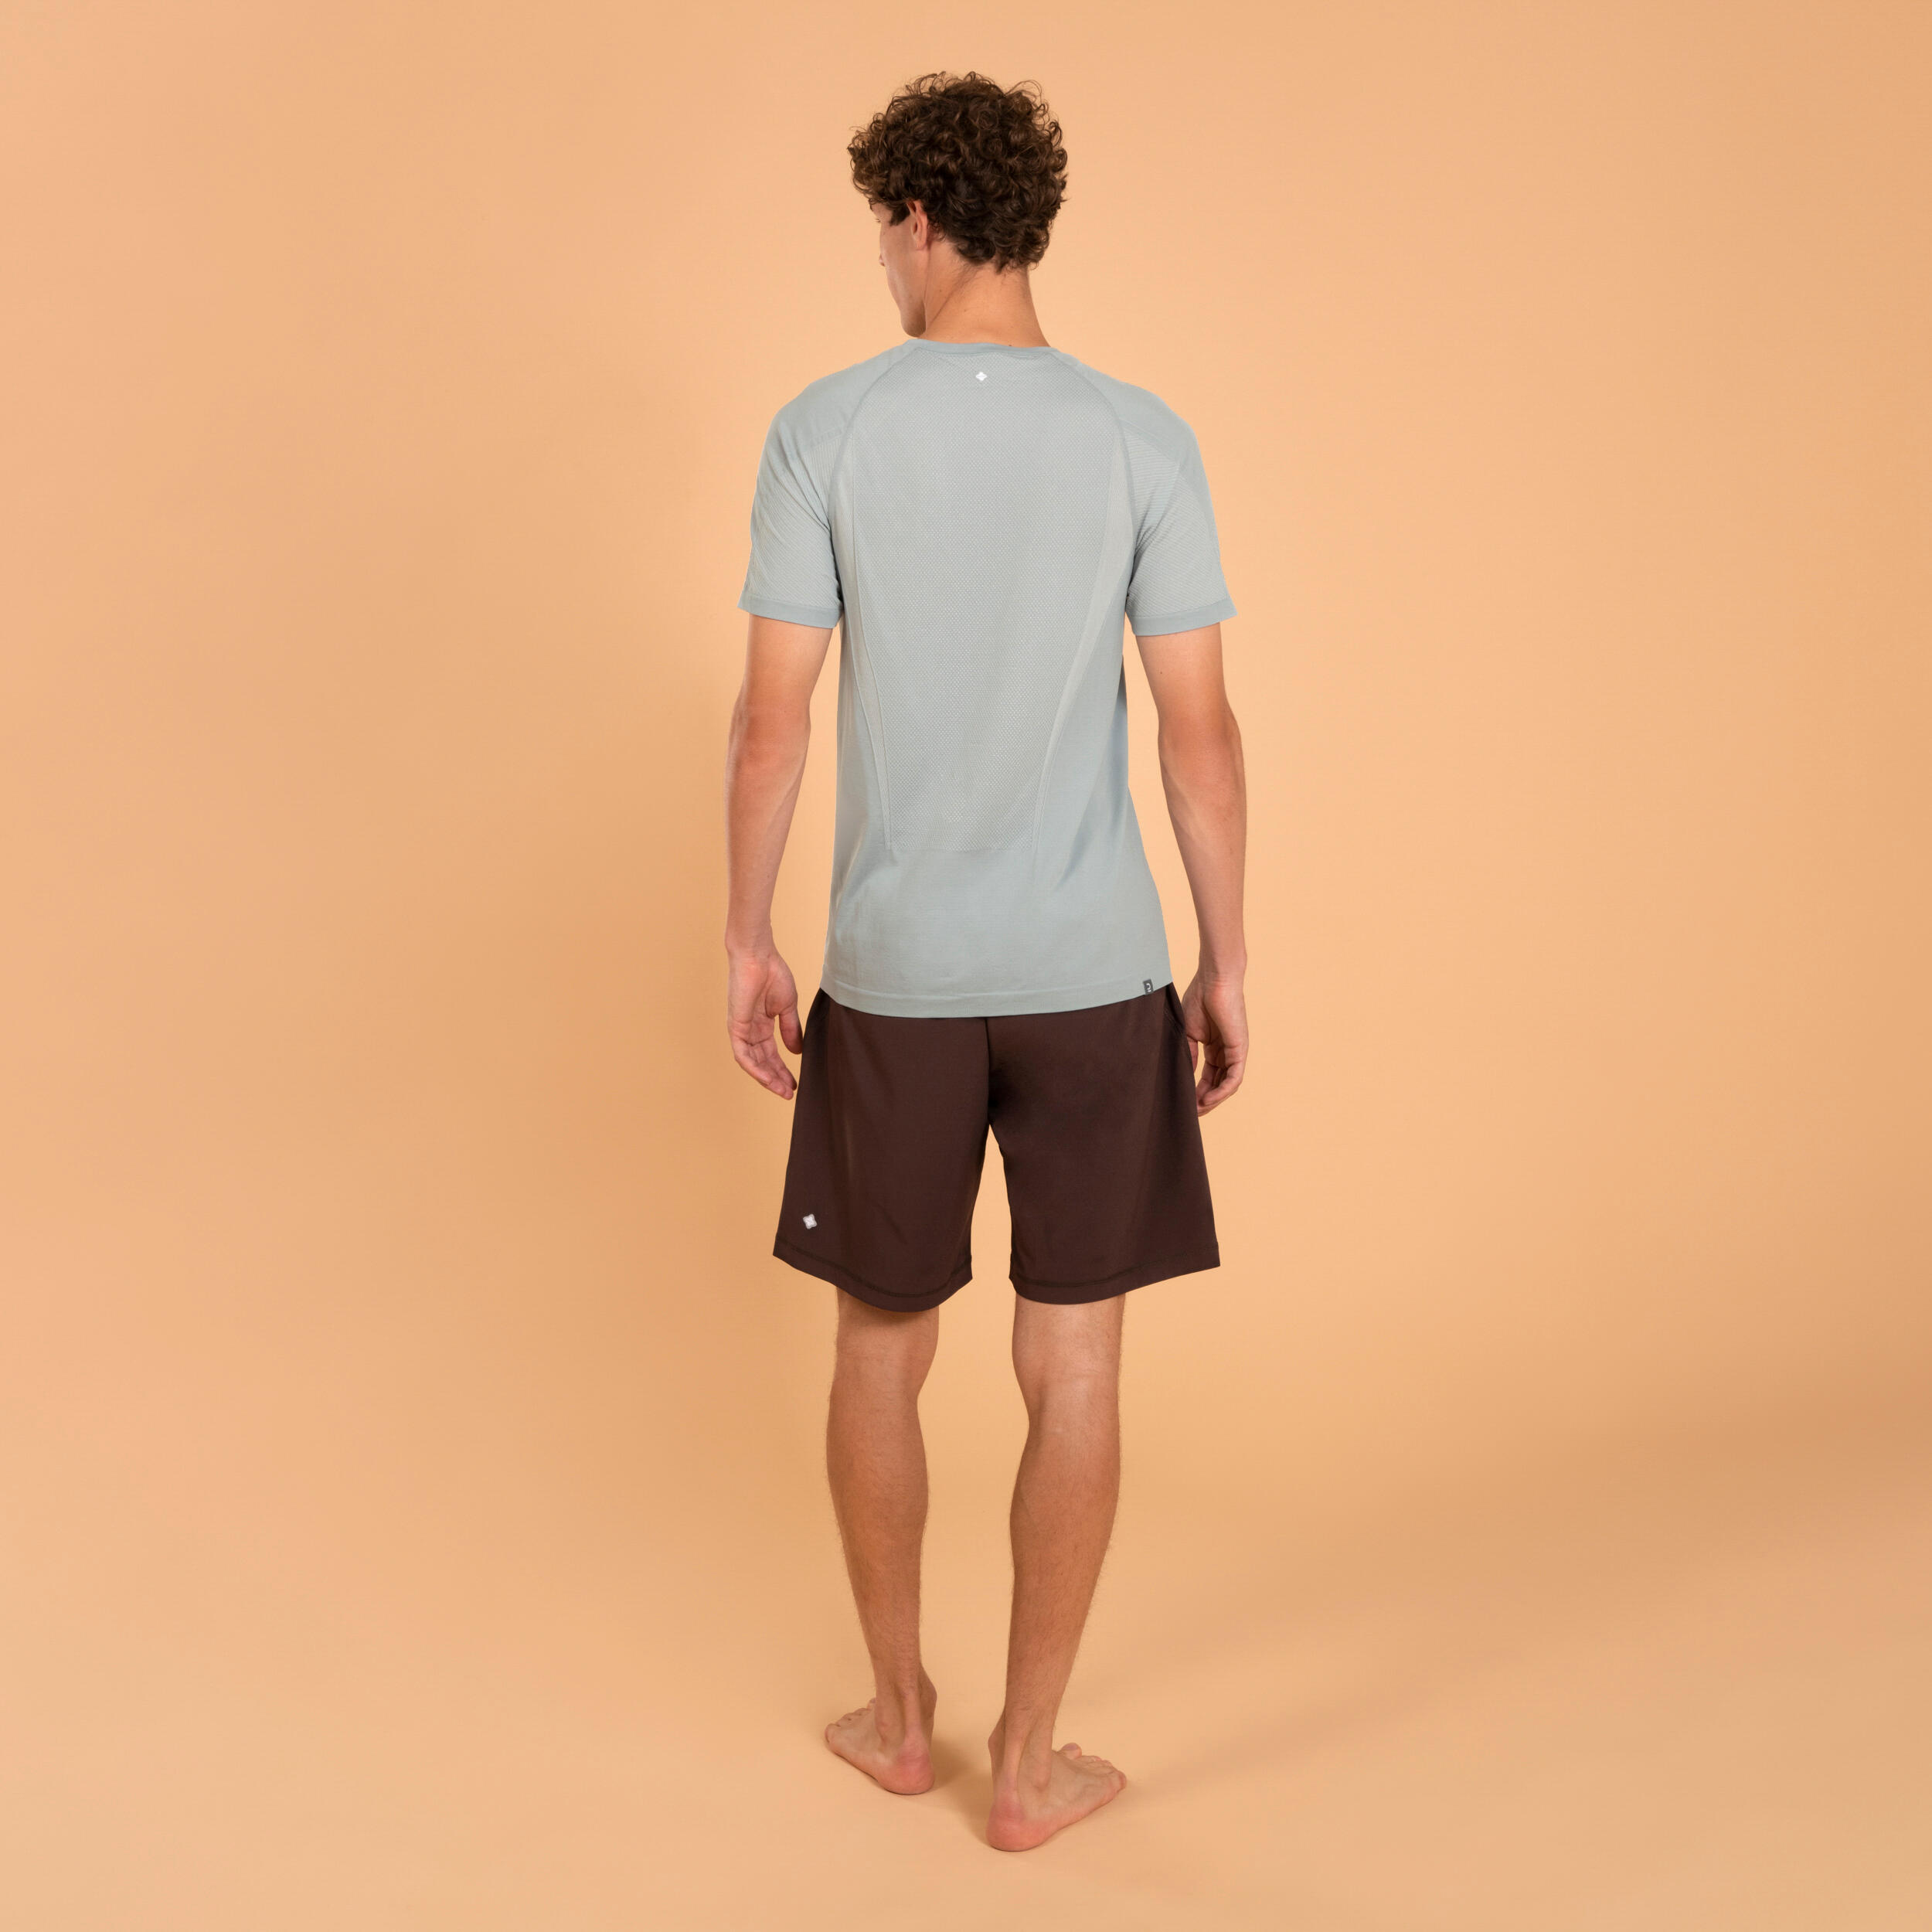 Men's Seamless Second Skin Yoga T-Shirt - Black